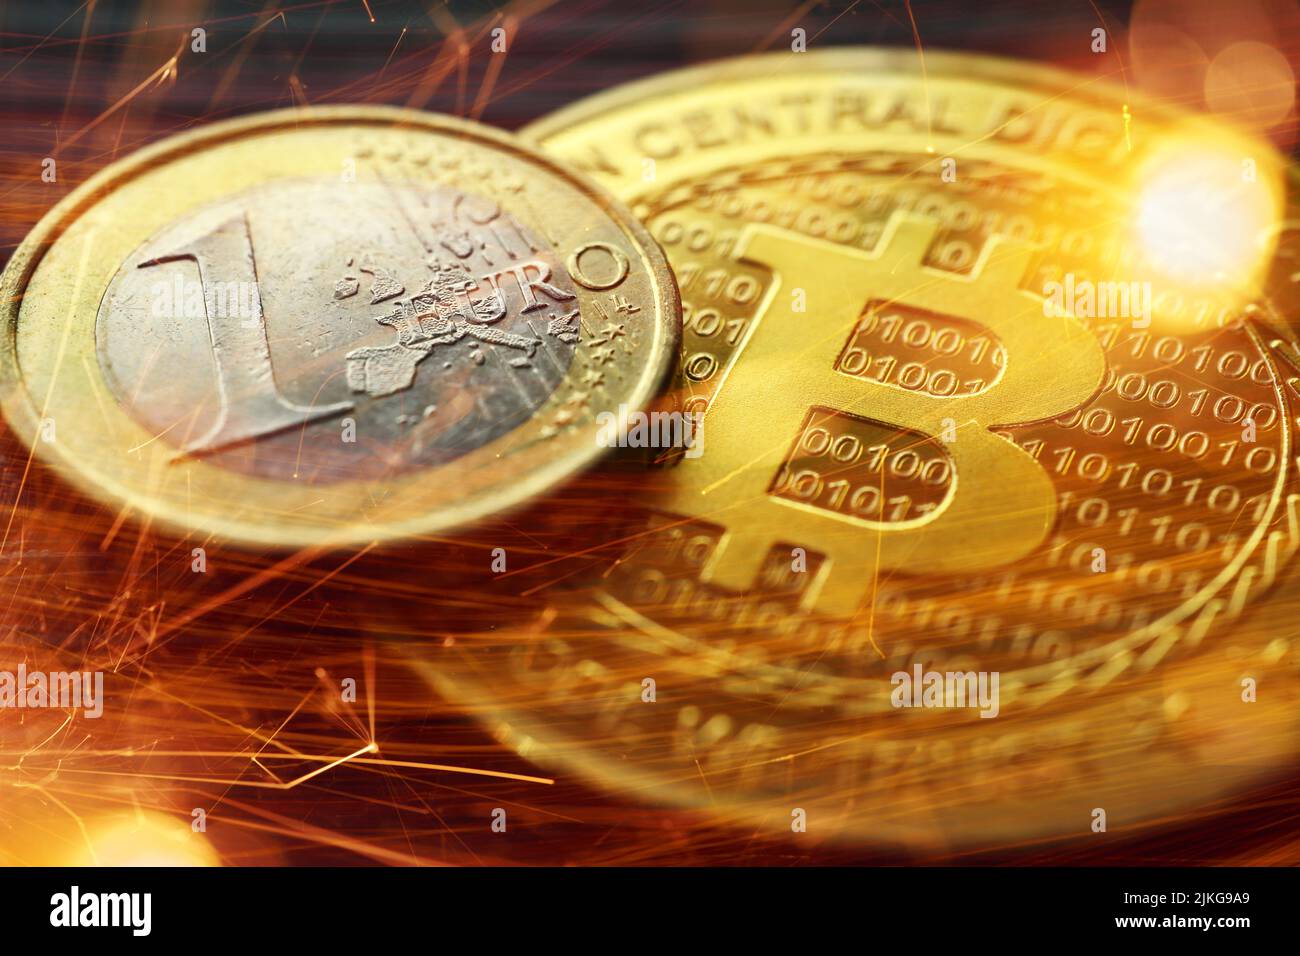 Euro Coin And Bitcoin Coin, Crypto Currency Stock Photo